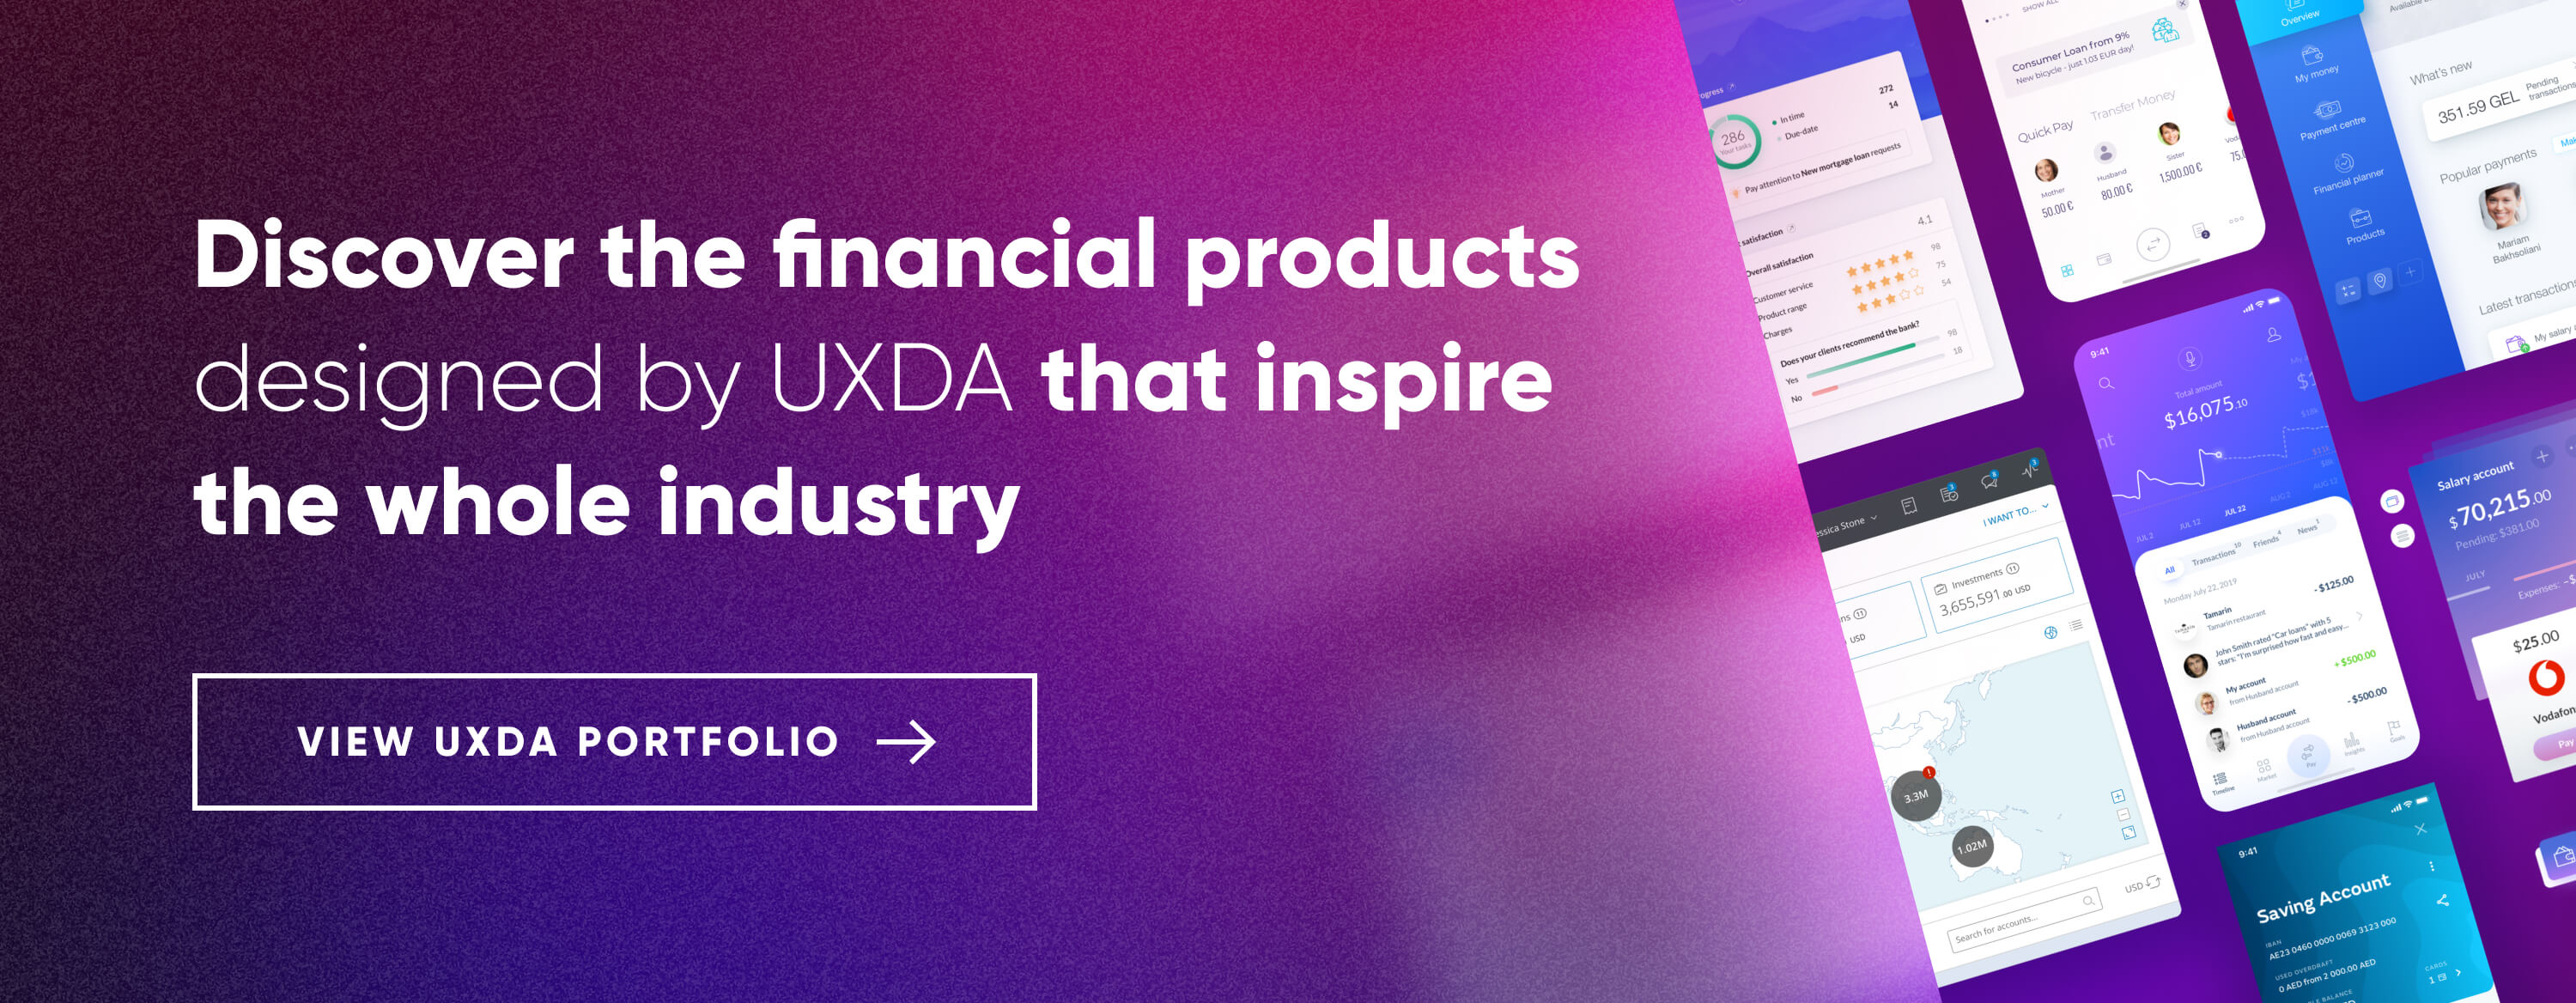 uxda-portfolio-financial-digital-product-inspire-industry-ux-1667292304.jpg